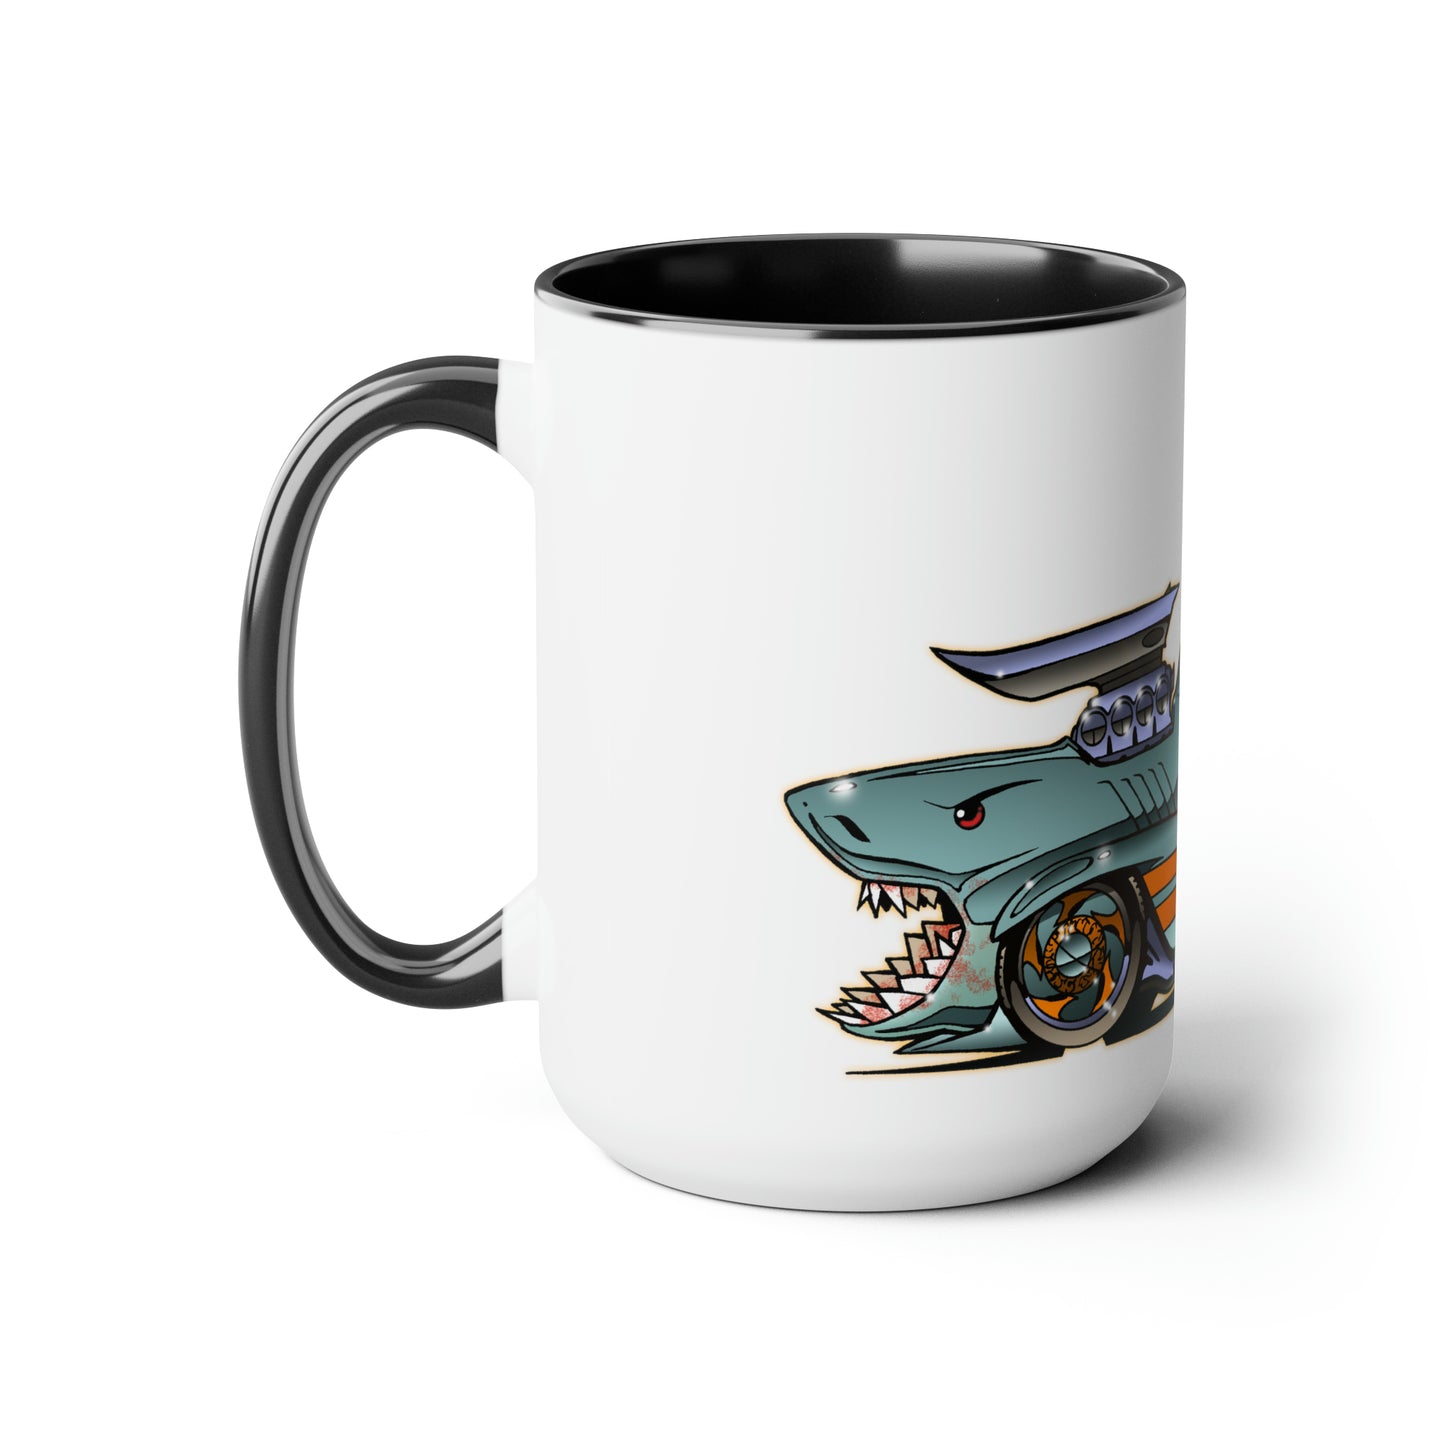 MANEATER GREAT WHITE SHARK Sealife Hot Rod Coffee Mug 15oz